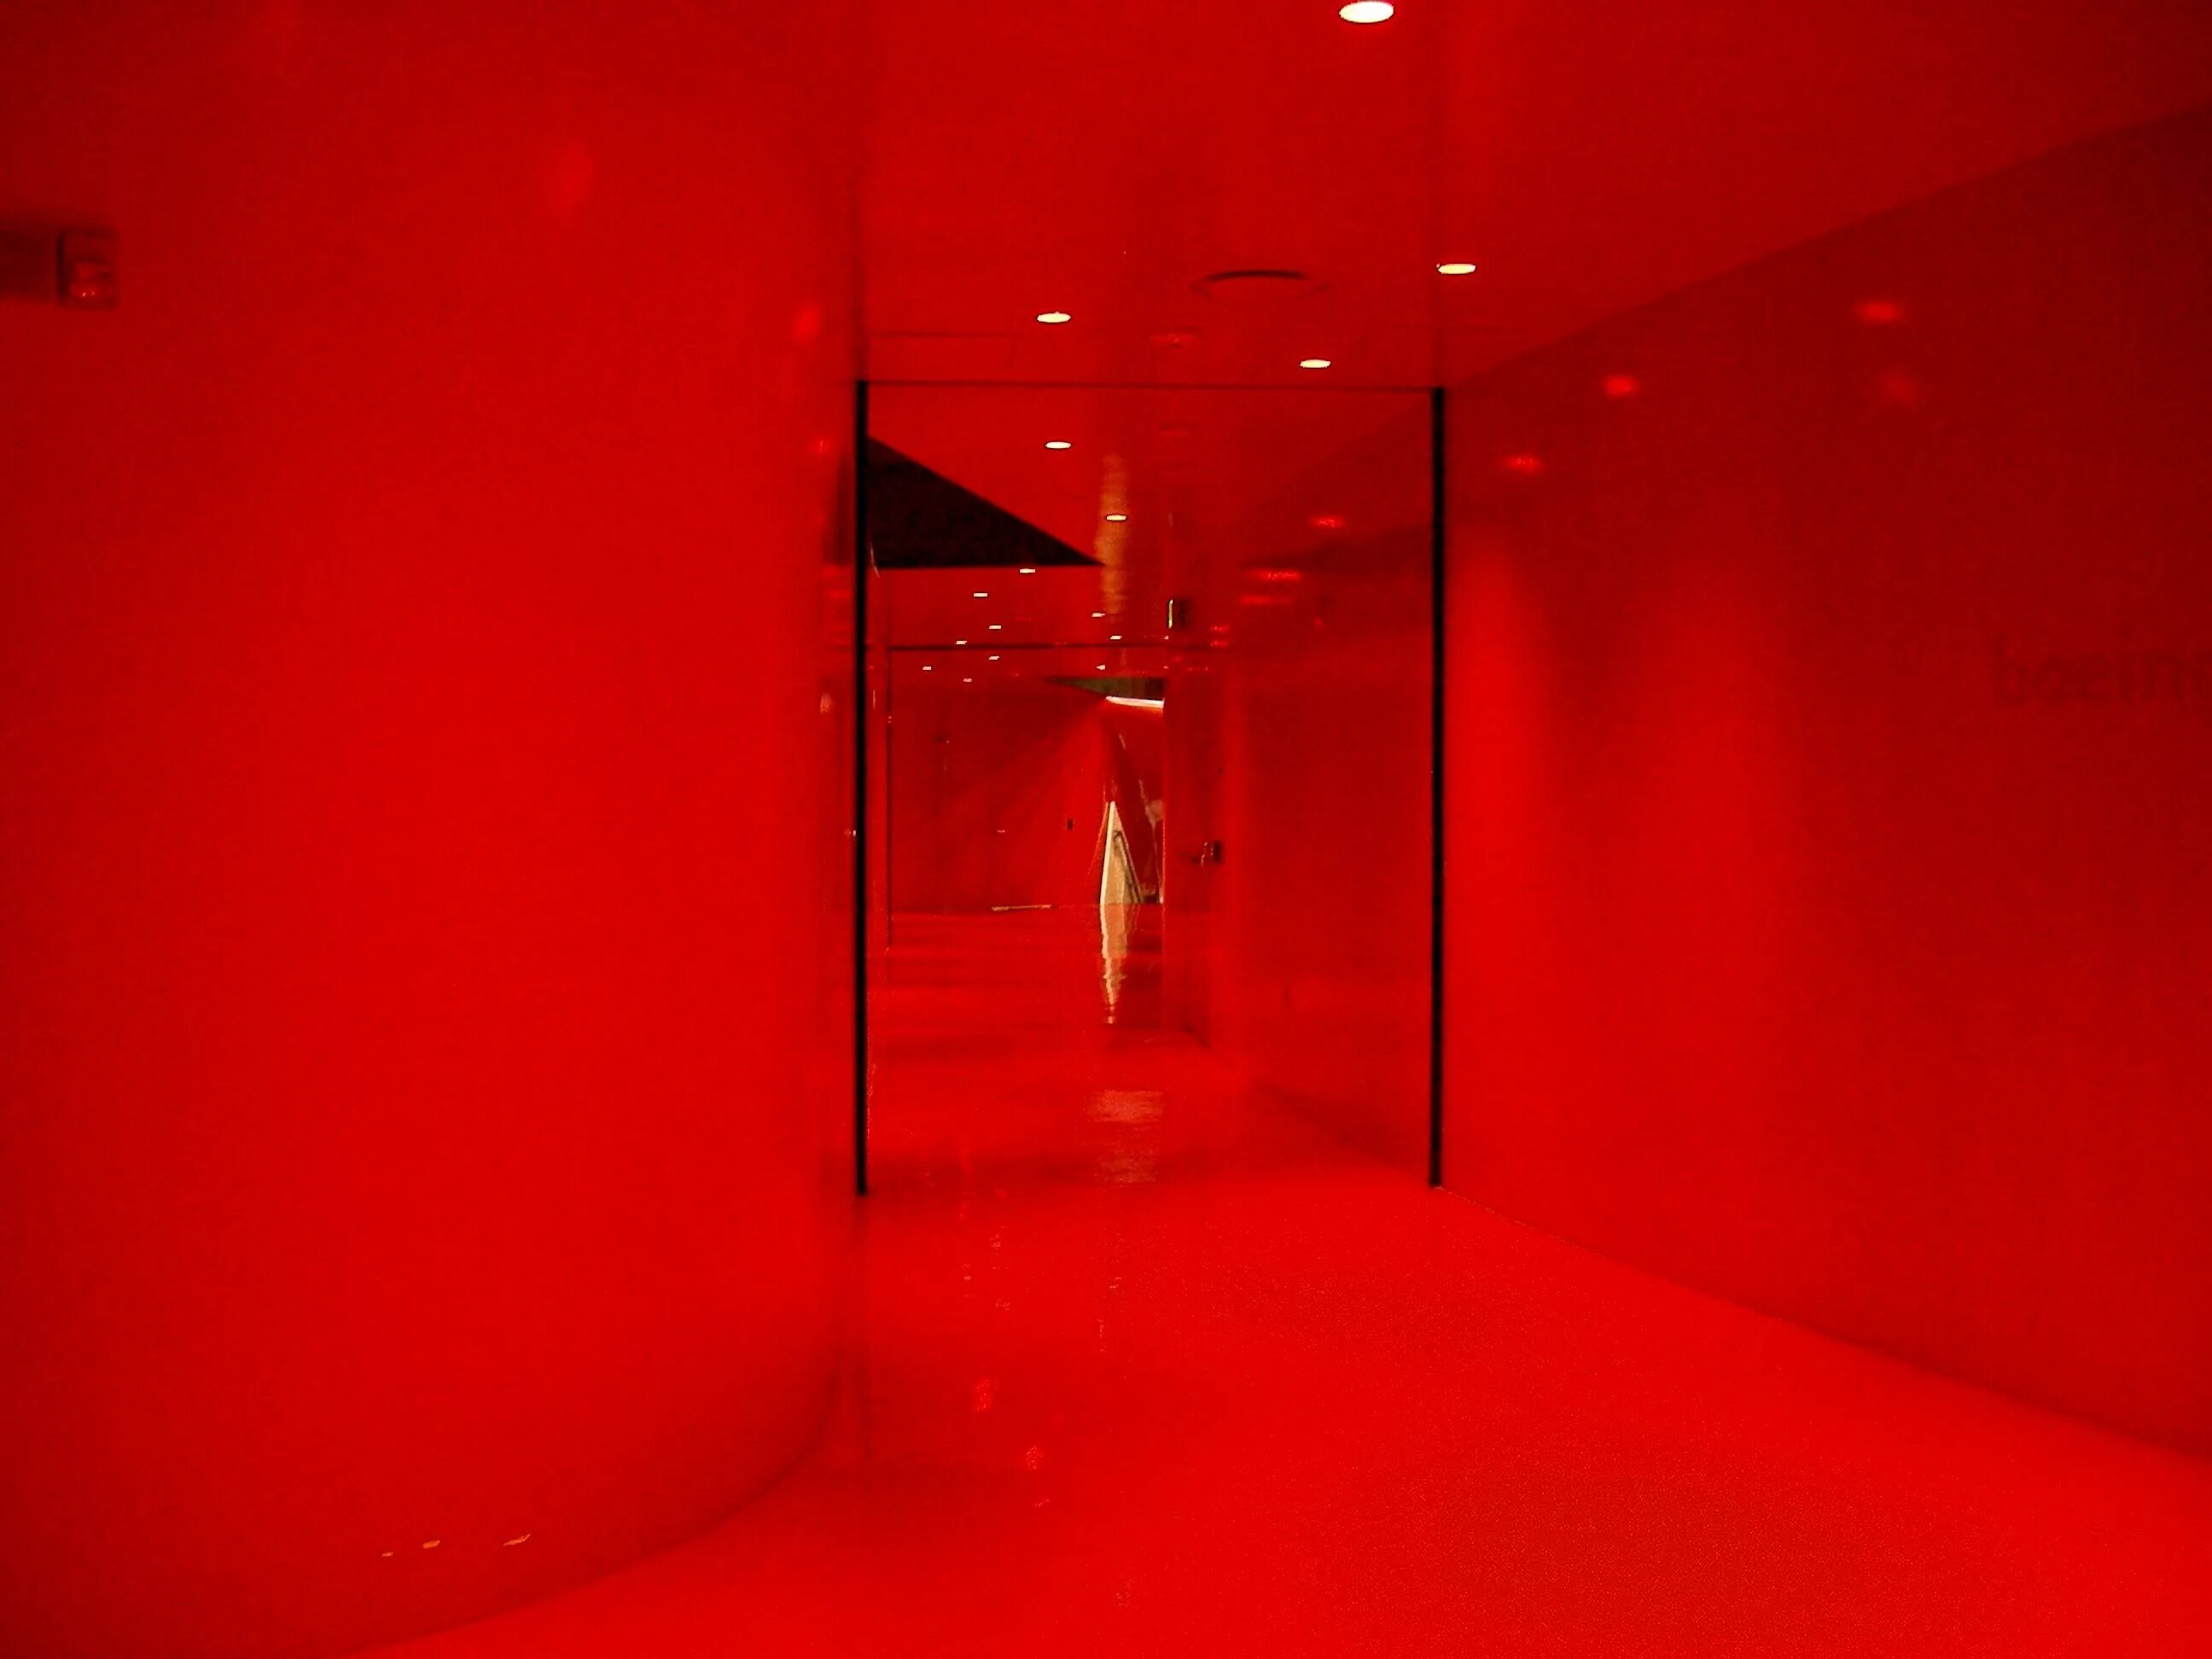 Красная комн. Red Room" красная комната  (1999) ужасы ". Красная комната редрум даркнет. Комната с красной подсветкой. Красное освещение в комнате.